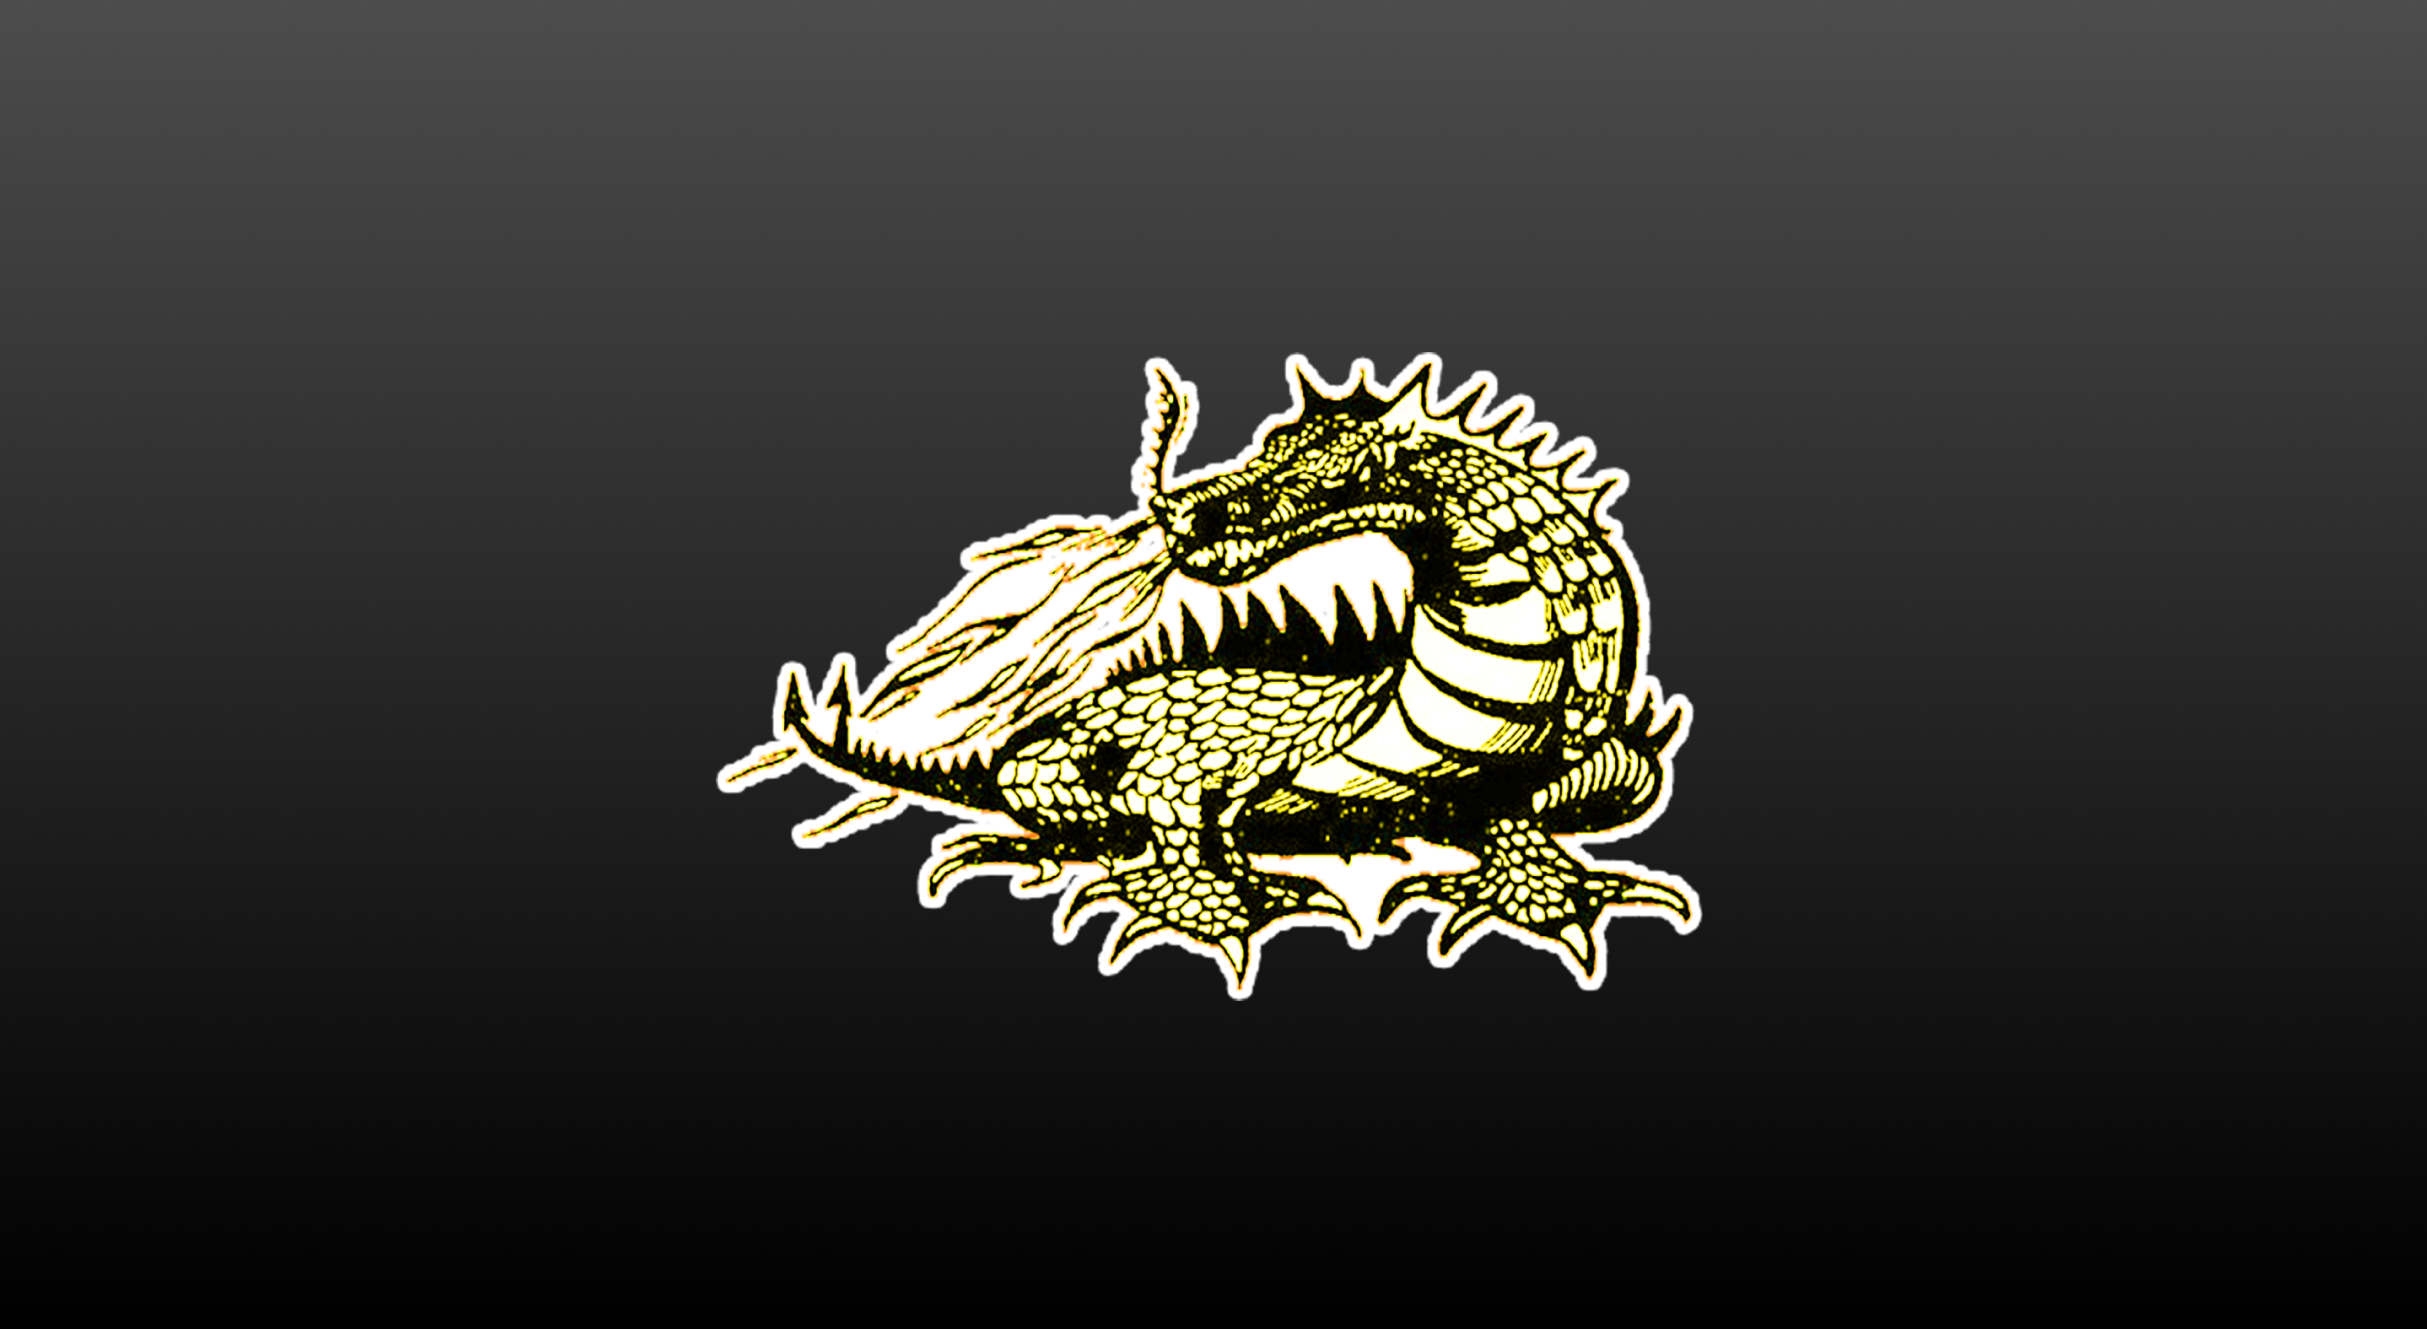 Large dragon logo on black background